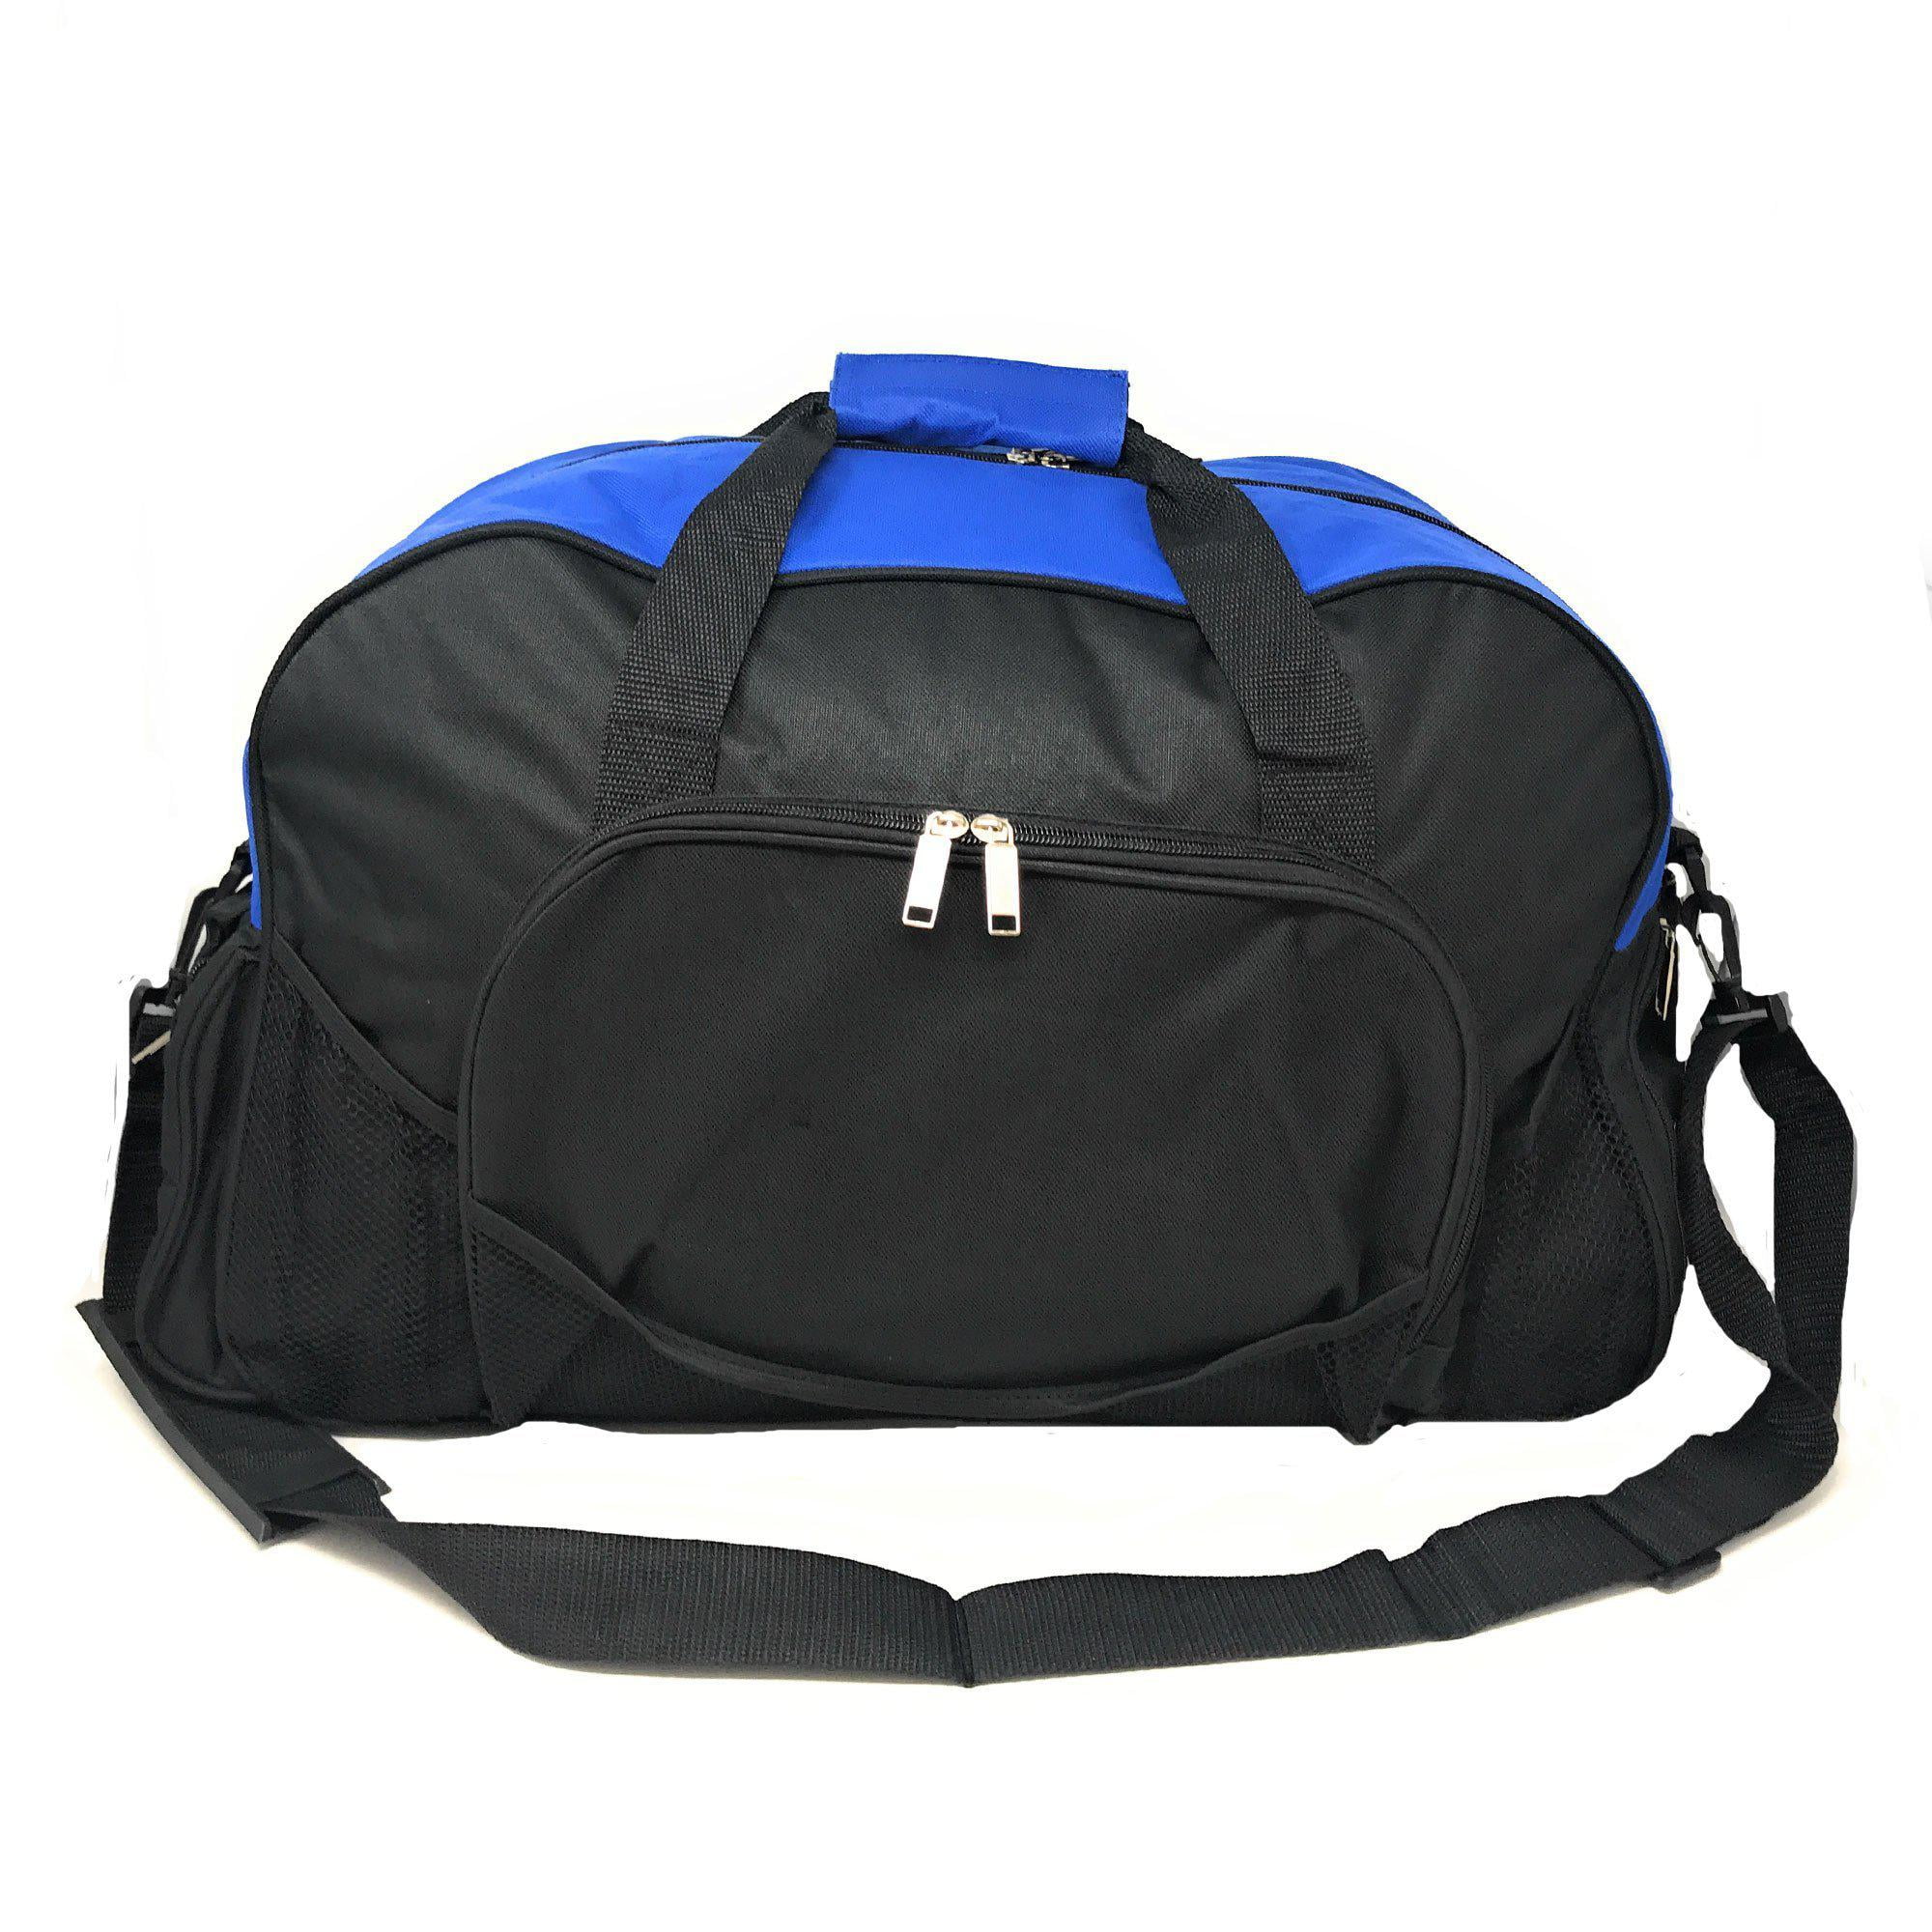 BG980 Port & Company Improved Basic Interior Zippered Pocket Duffel Gym Bag